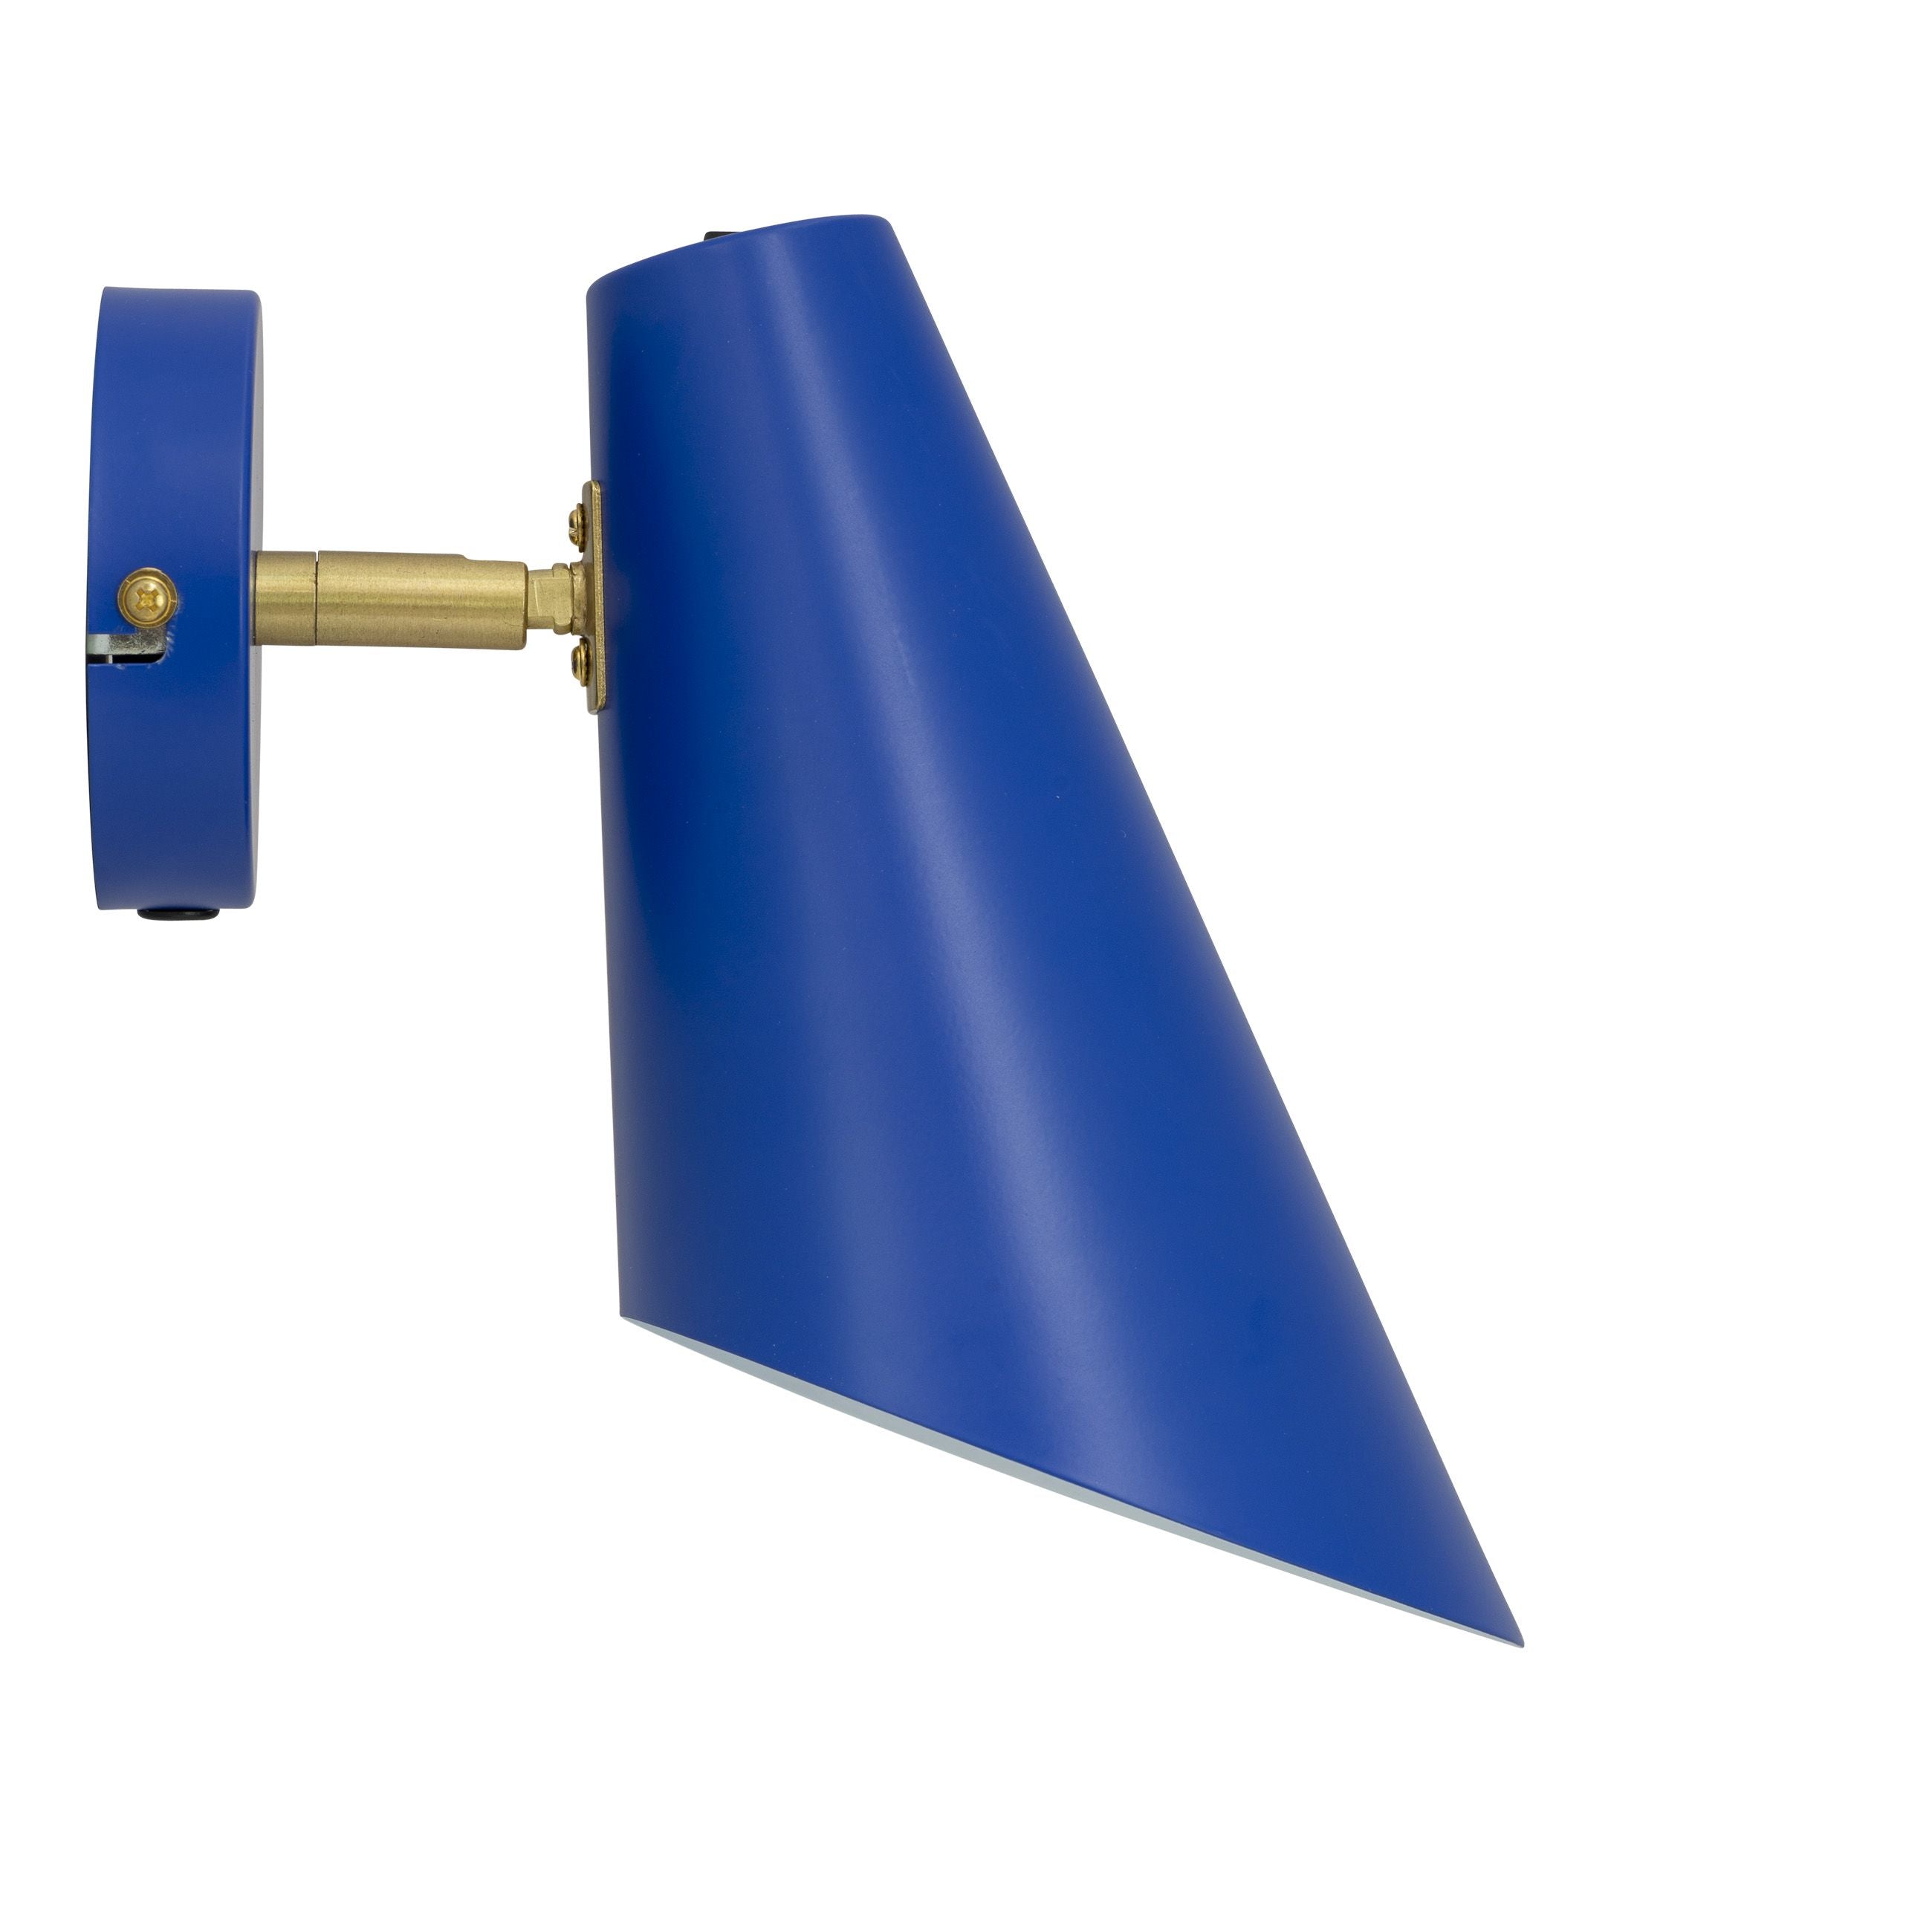 Dyberg Larsen Cale Wandlampe, blau